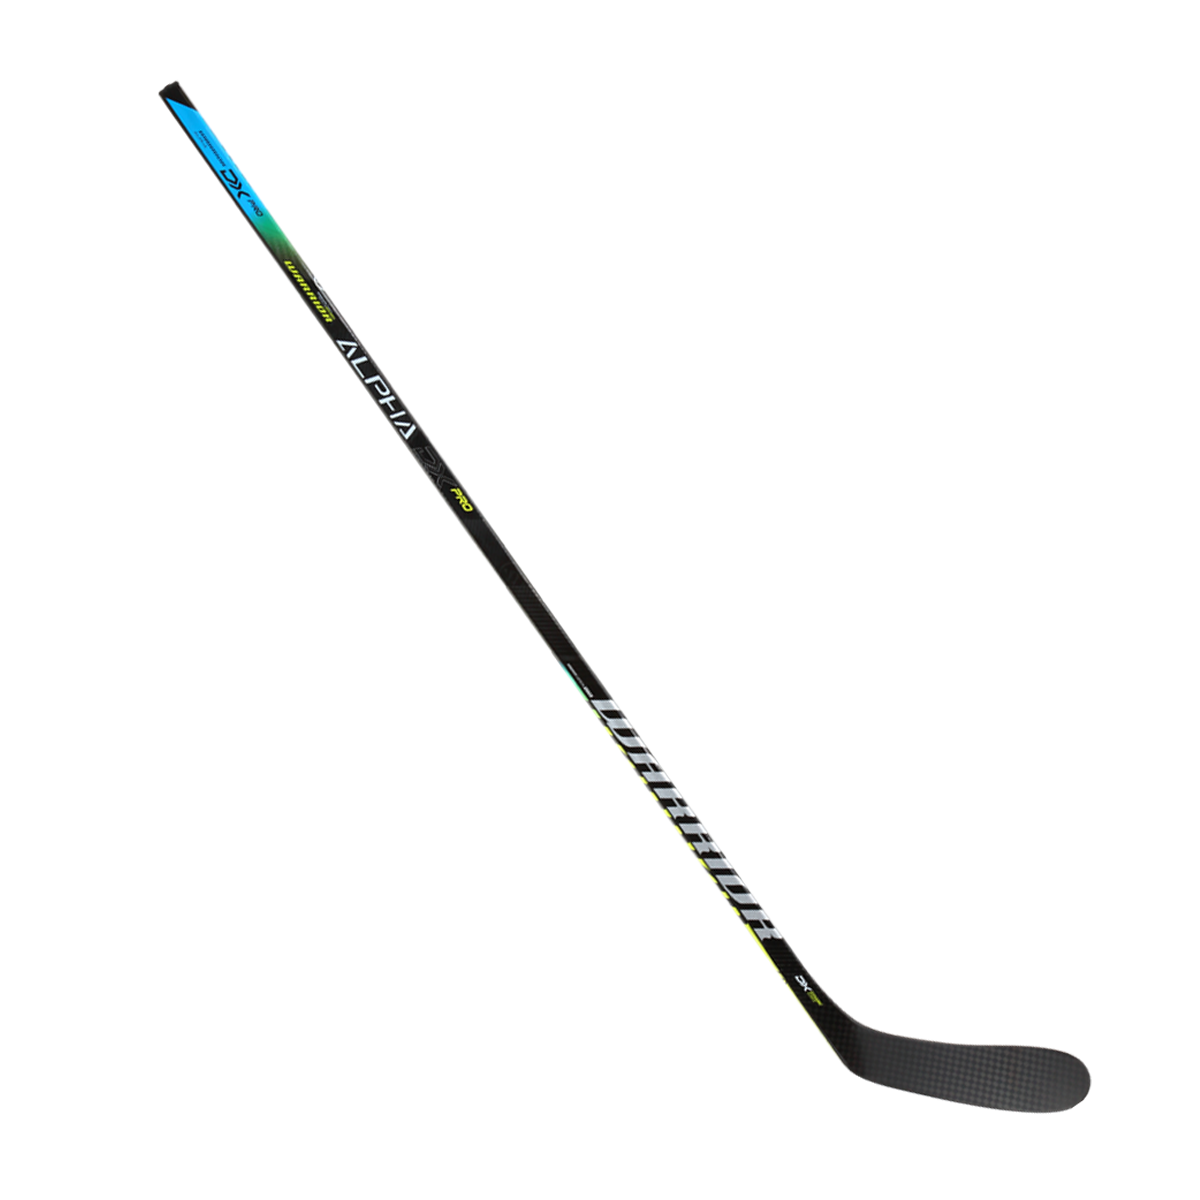 Warrior Alpha DX Pro Senior Hockey Stick